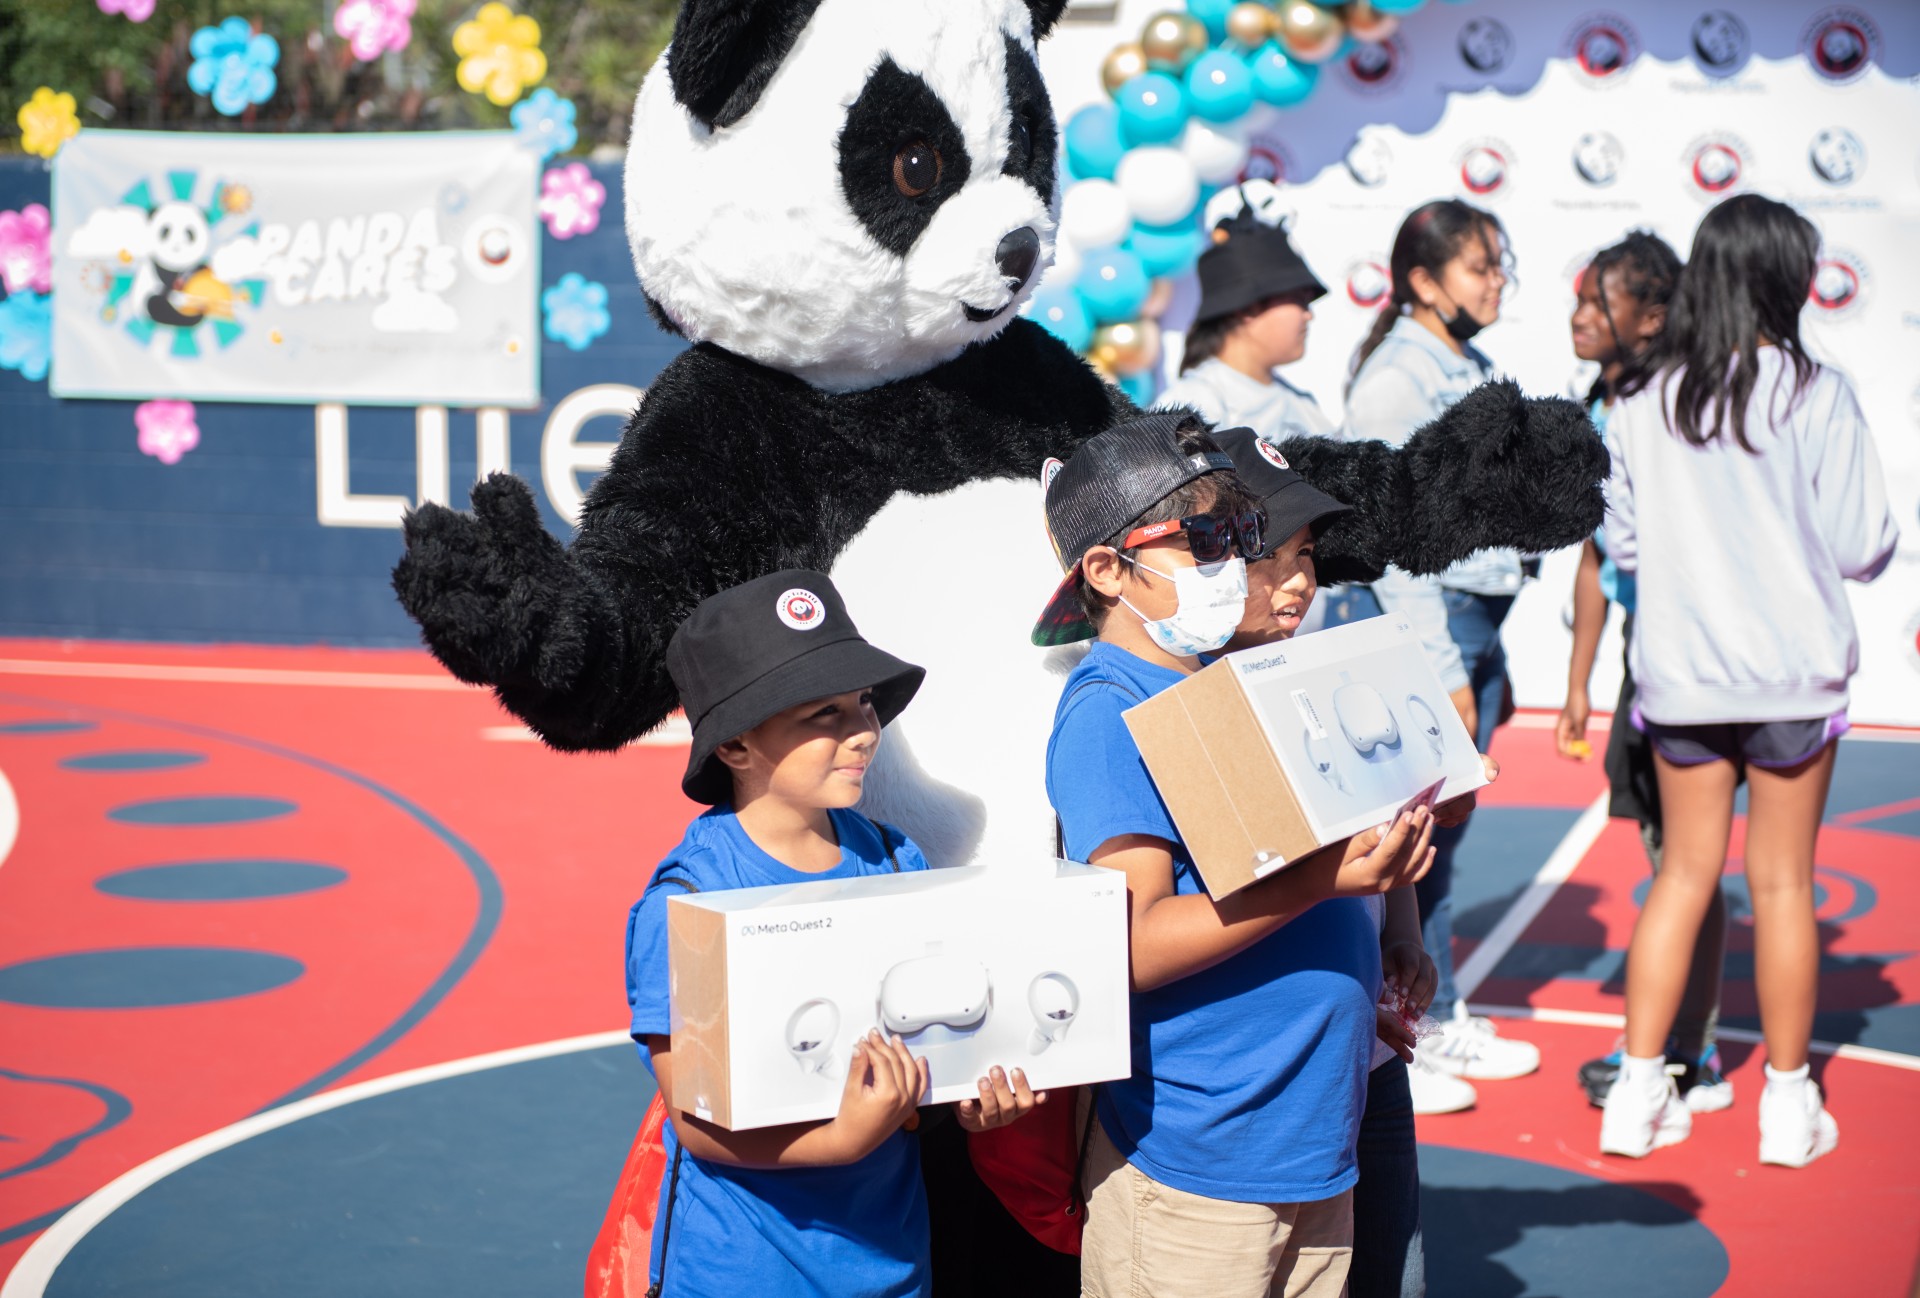 Panda Cares Sparks Joy during Panda Cares Day at over 110 Boys & Girls